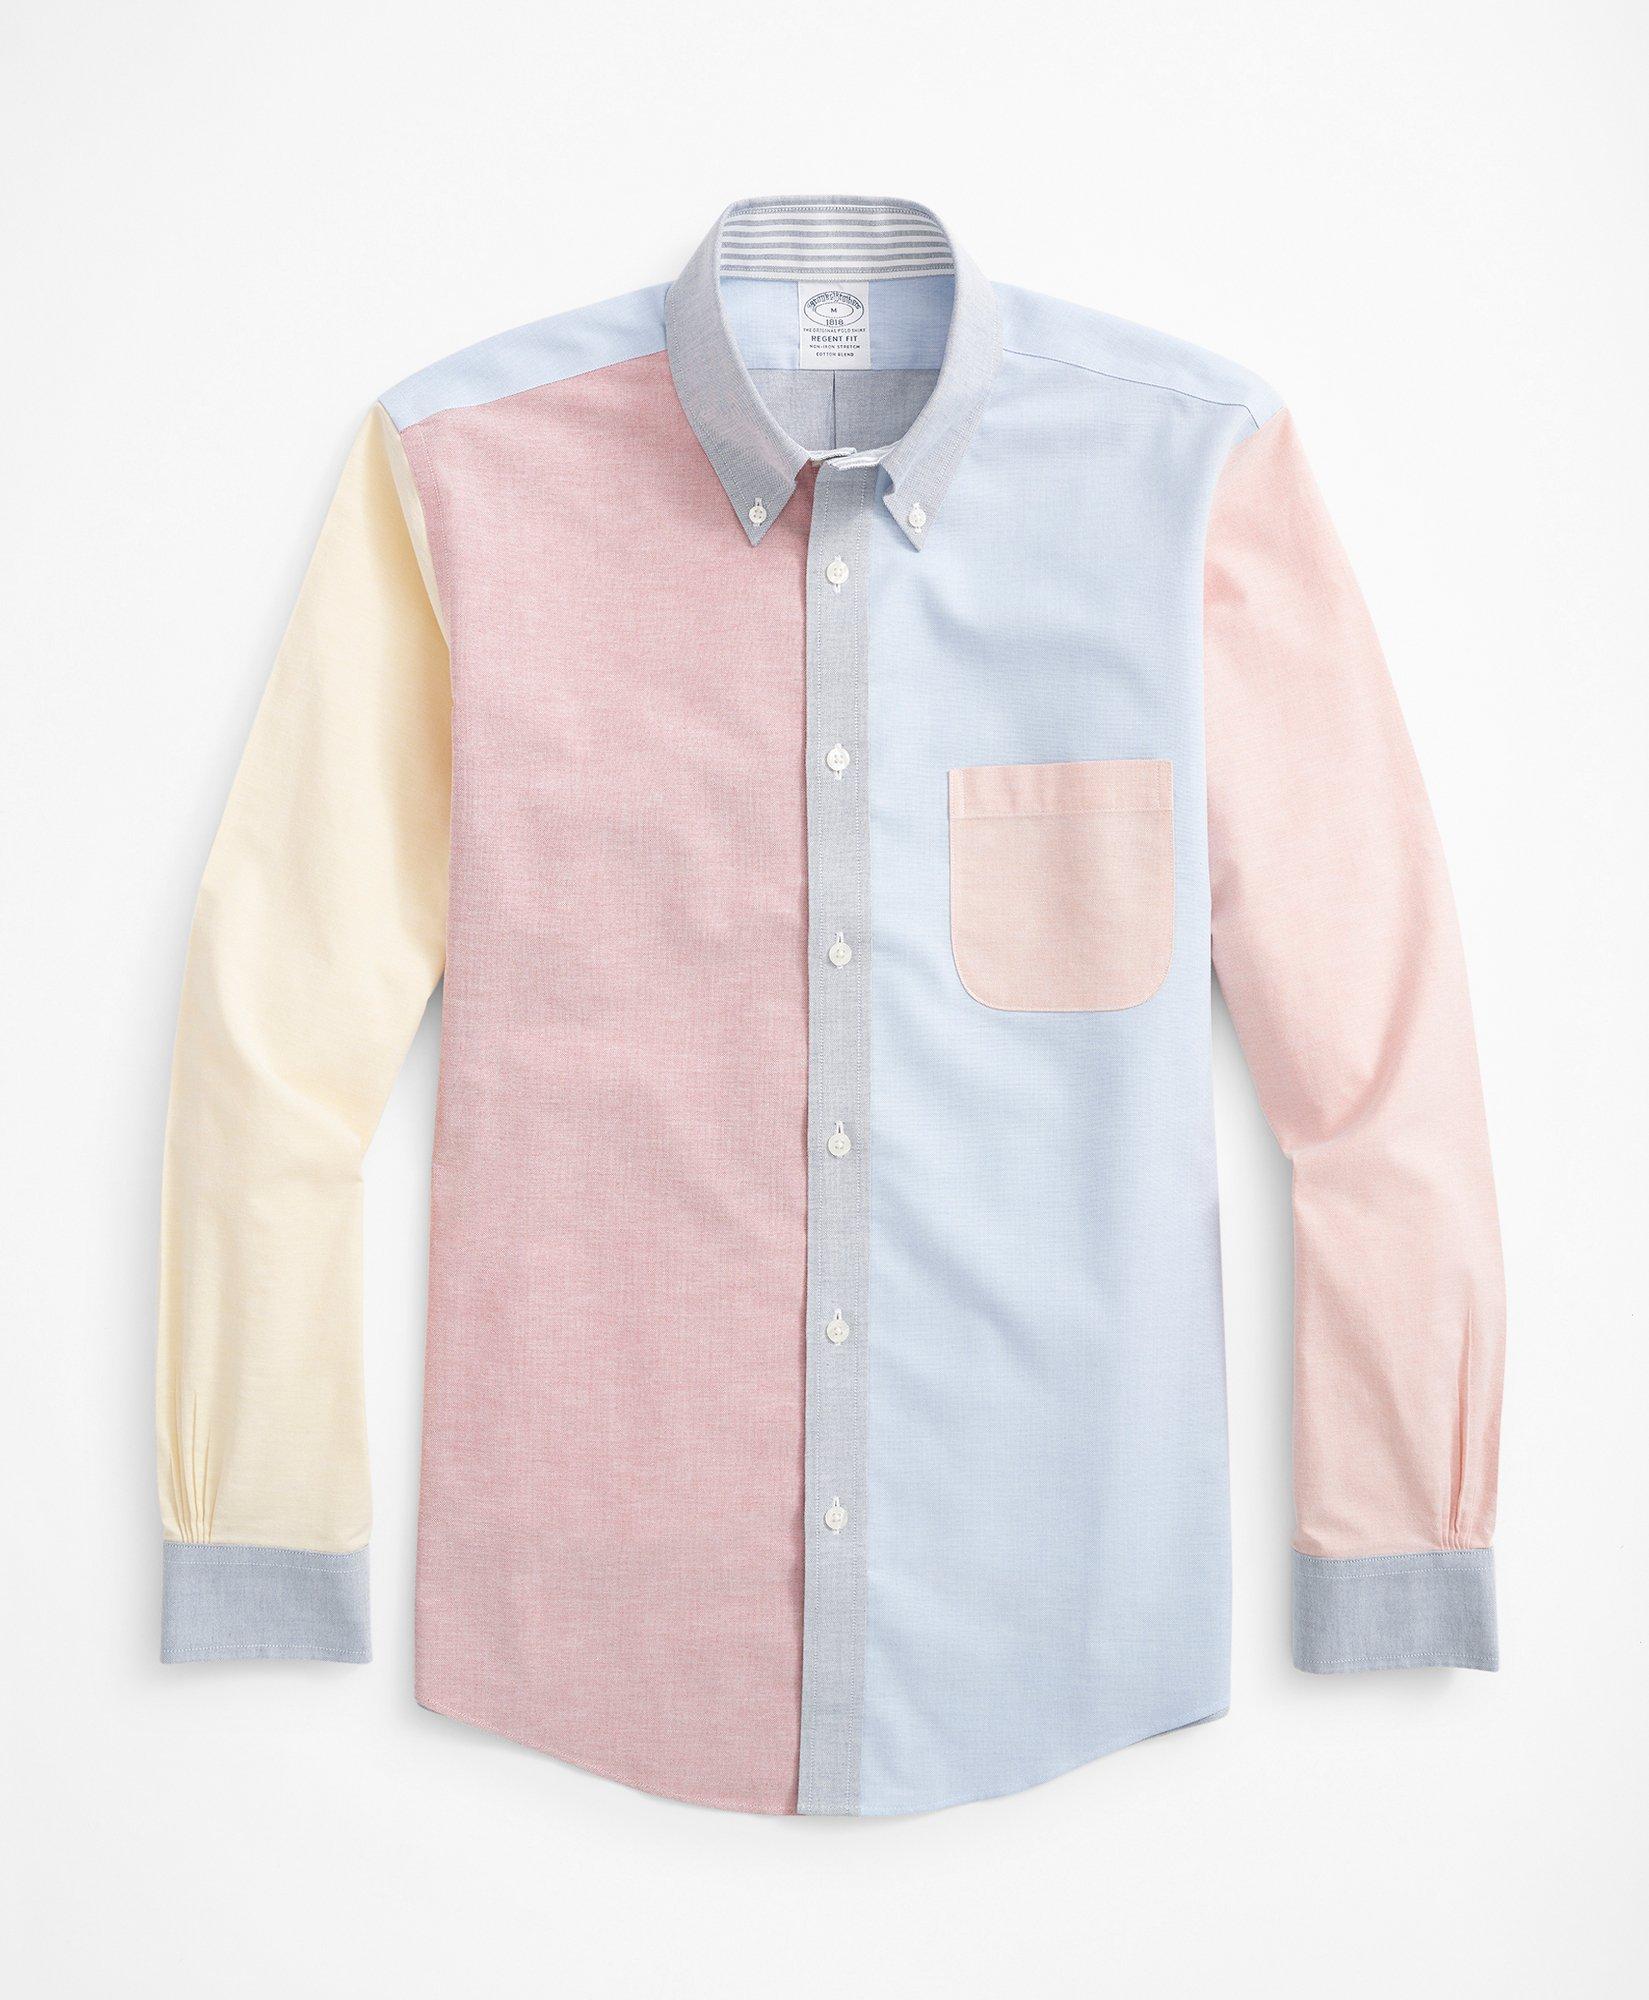 Classic 1 Pocket Standard Shirt - Multi Colour